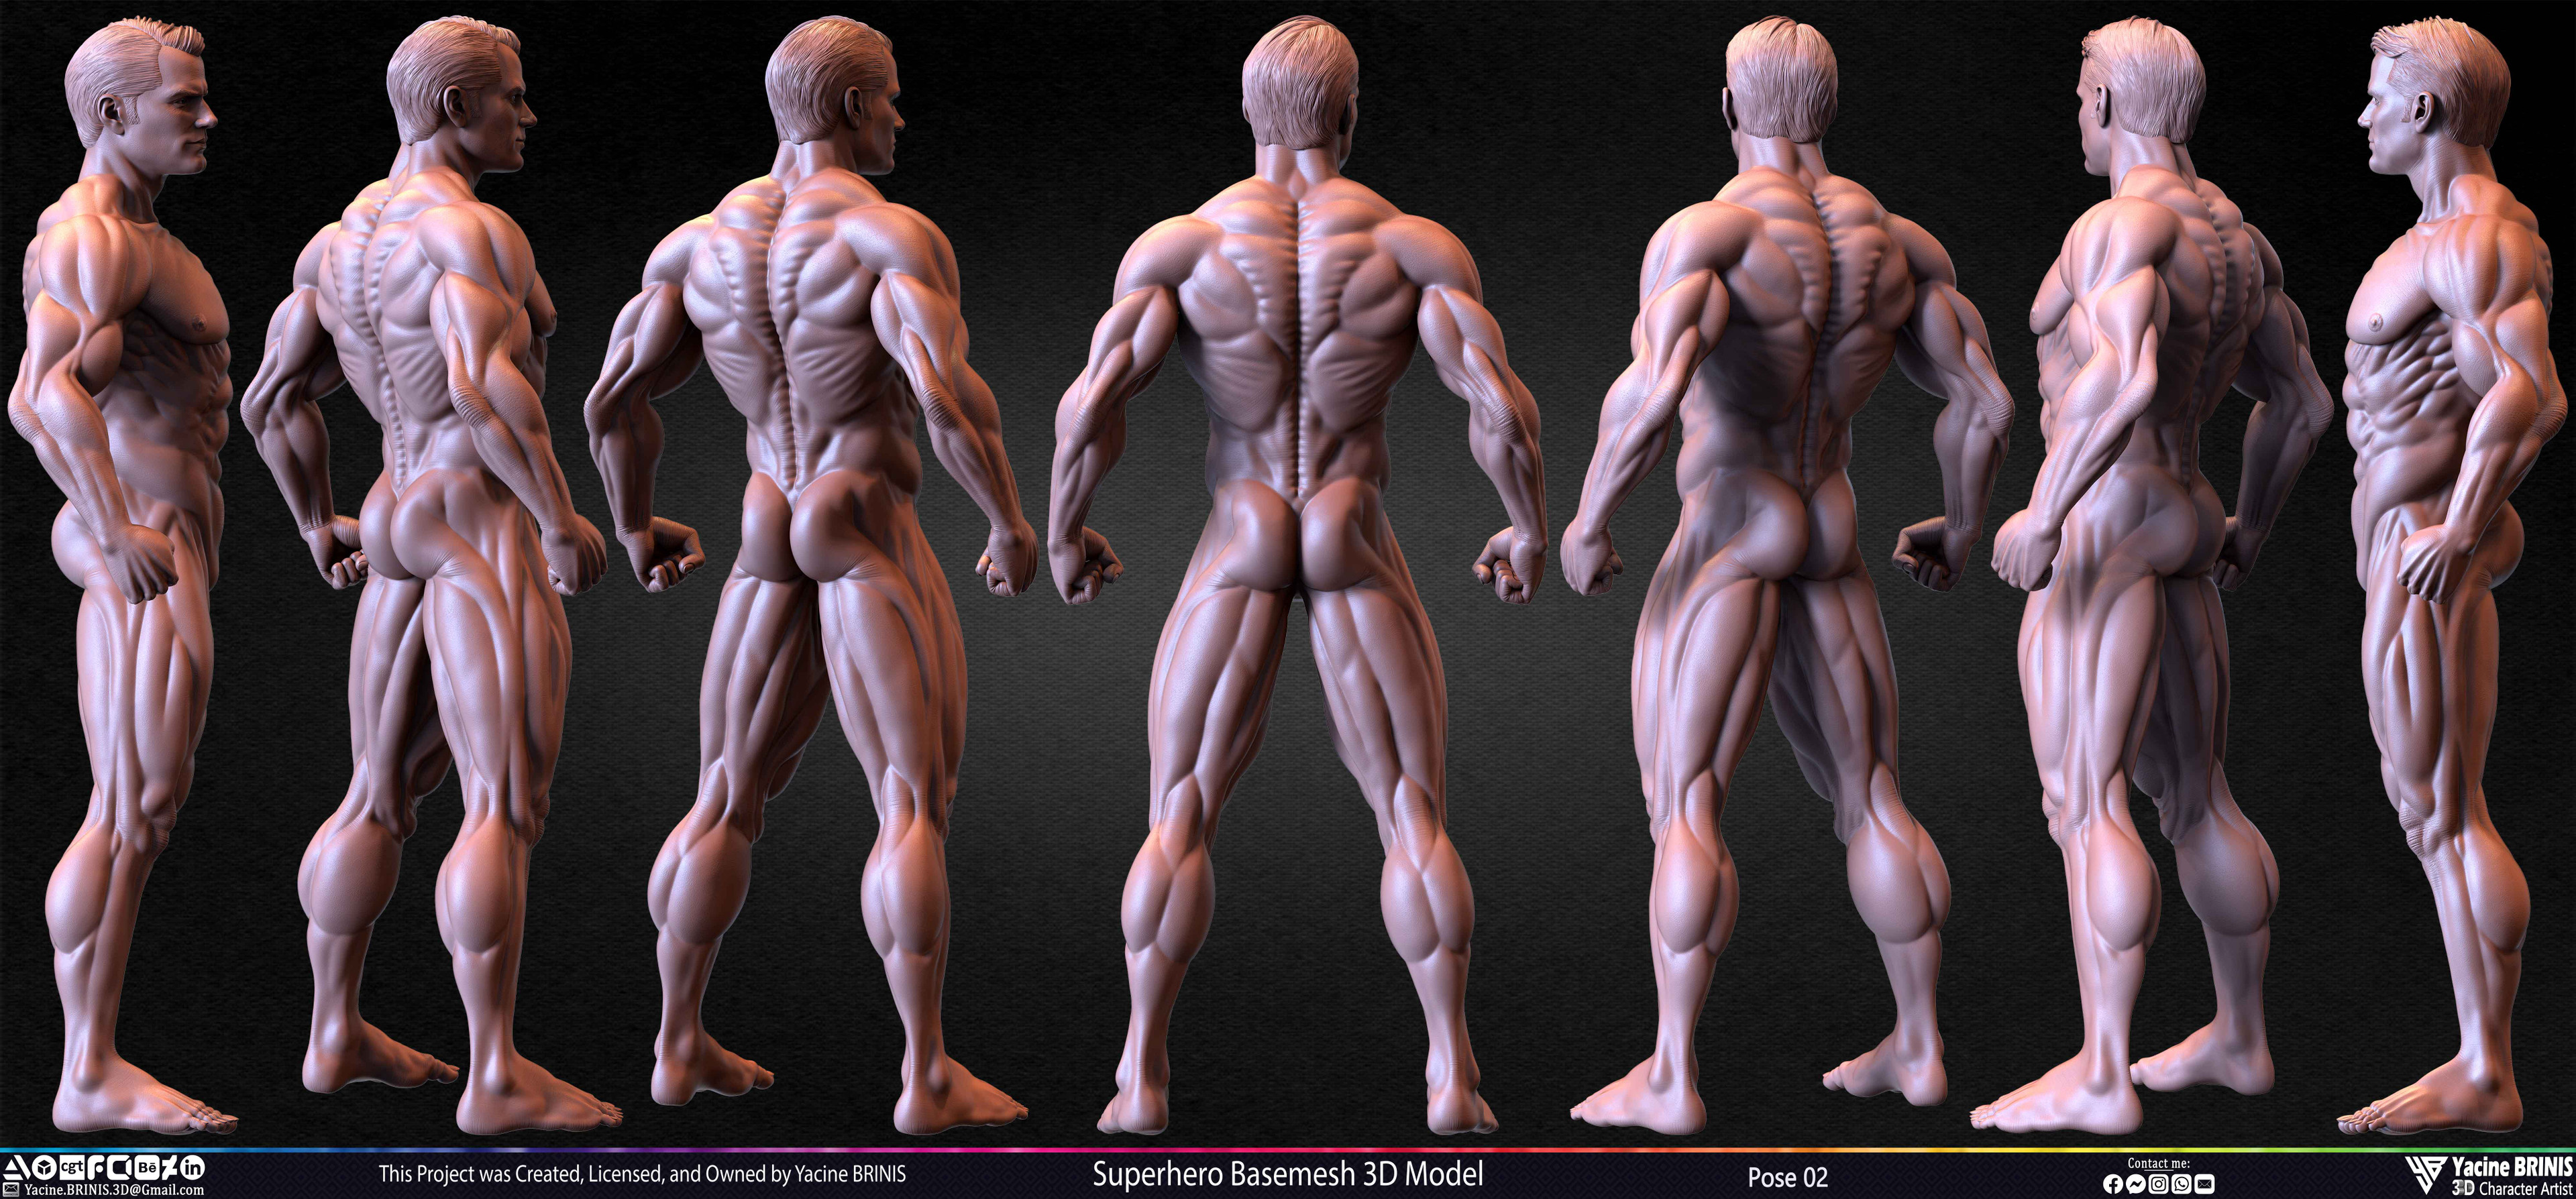 Super-Hero Basemesh 3D Model - Henry Cavill- Man of Steel - Superman - Pose 02 Sculpted by Yacine BRINIS Set 027